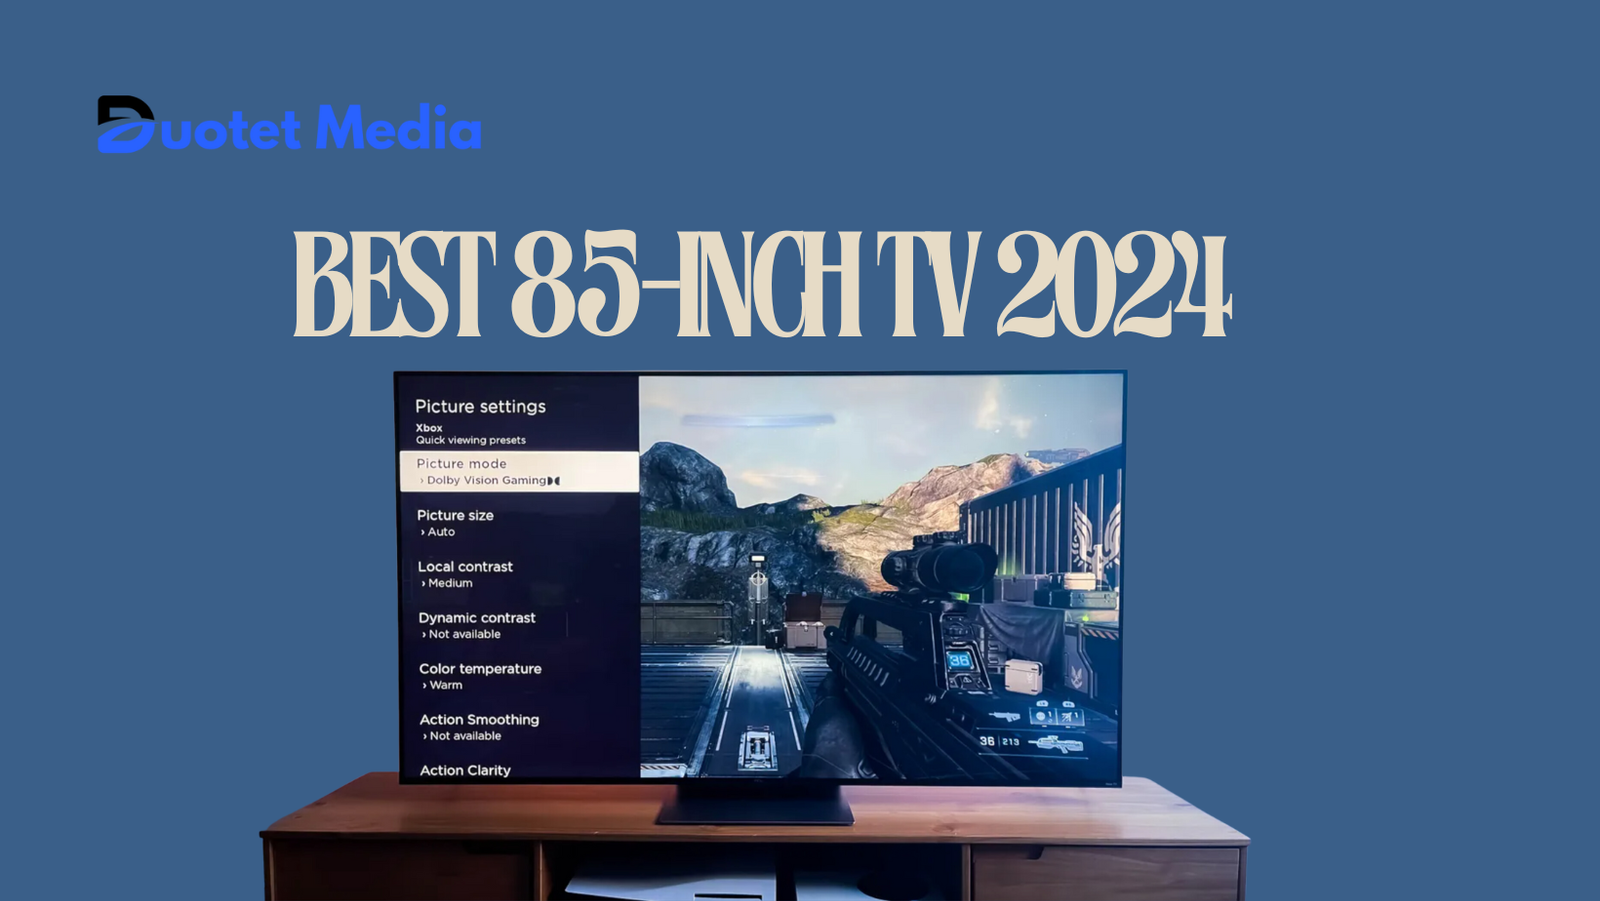 Best 85-inch tv 2024